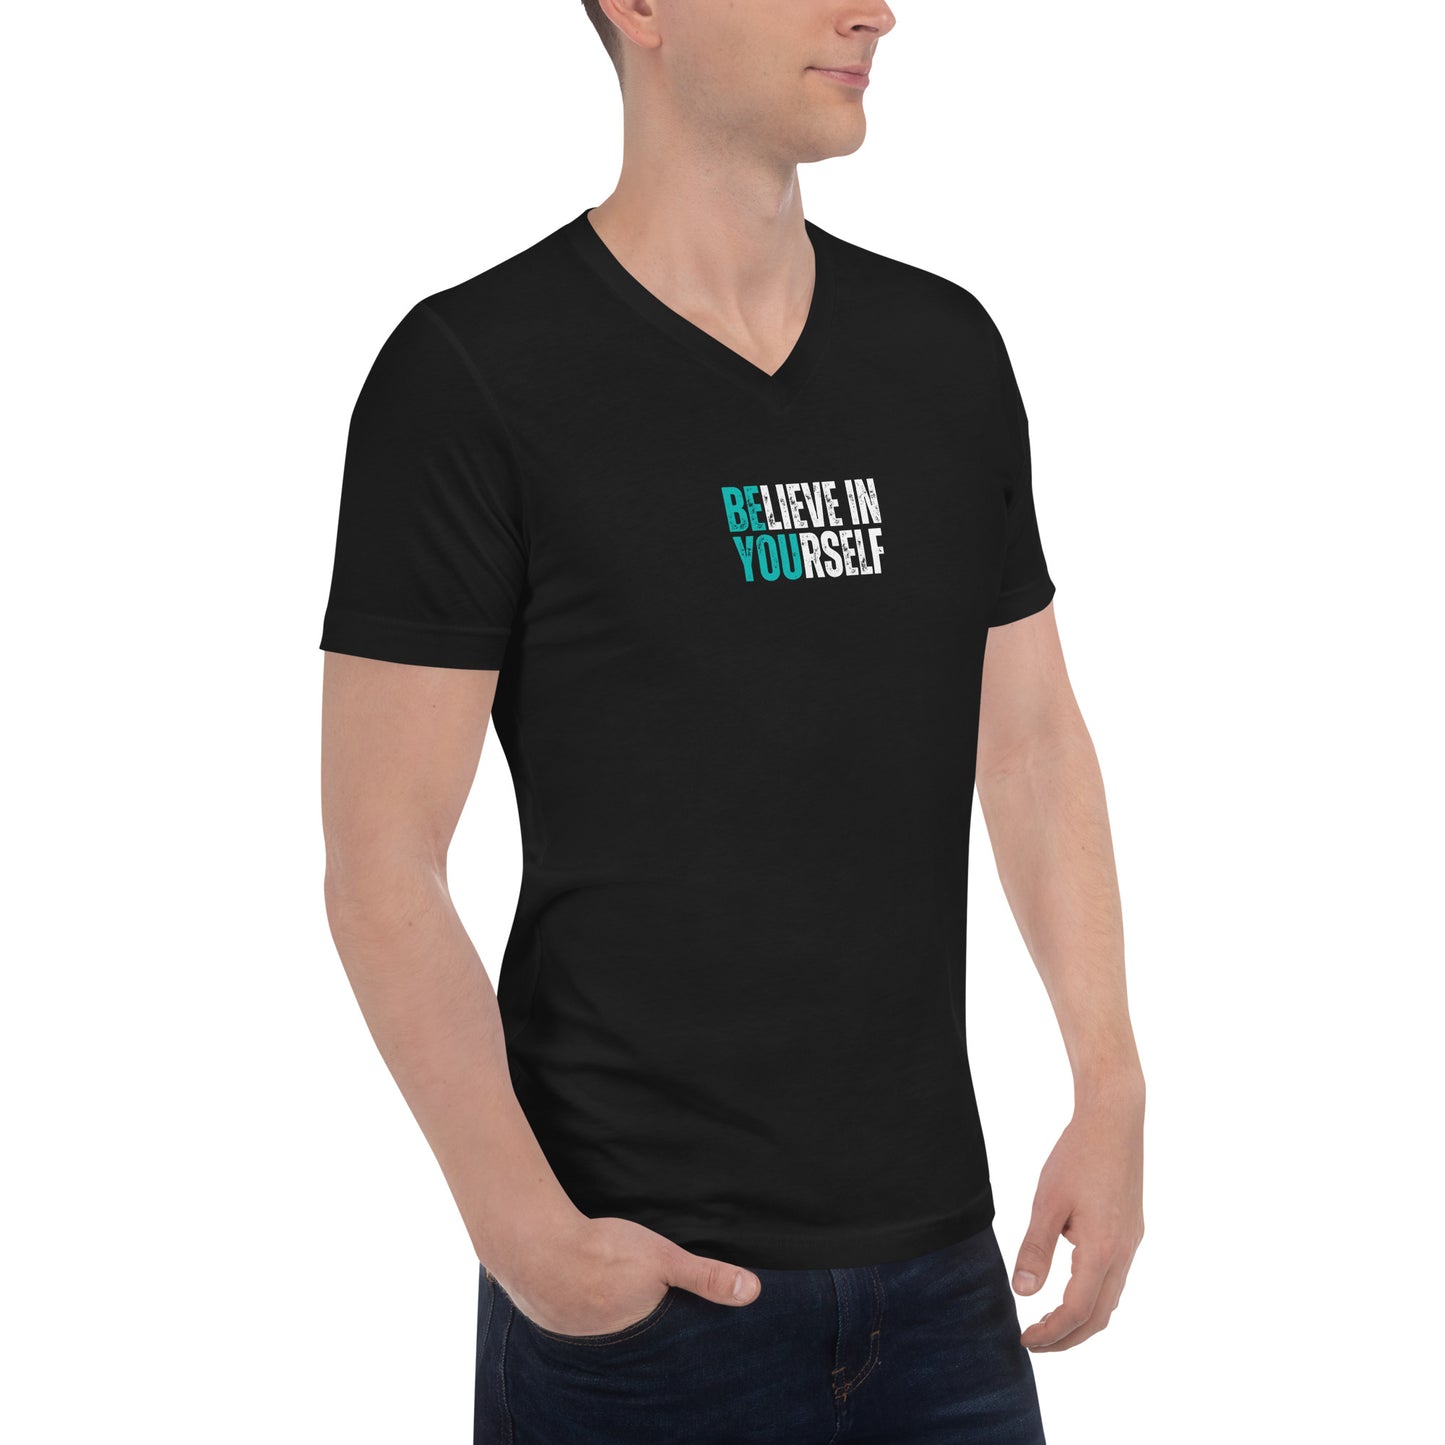 BElieve in YOUrself - Unisex Short Sleeve V-Neck T-Shirt